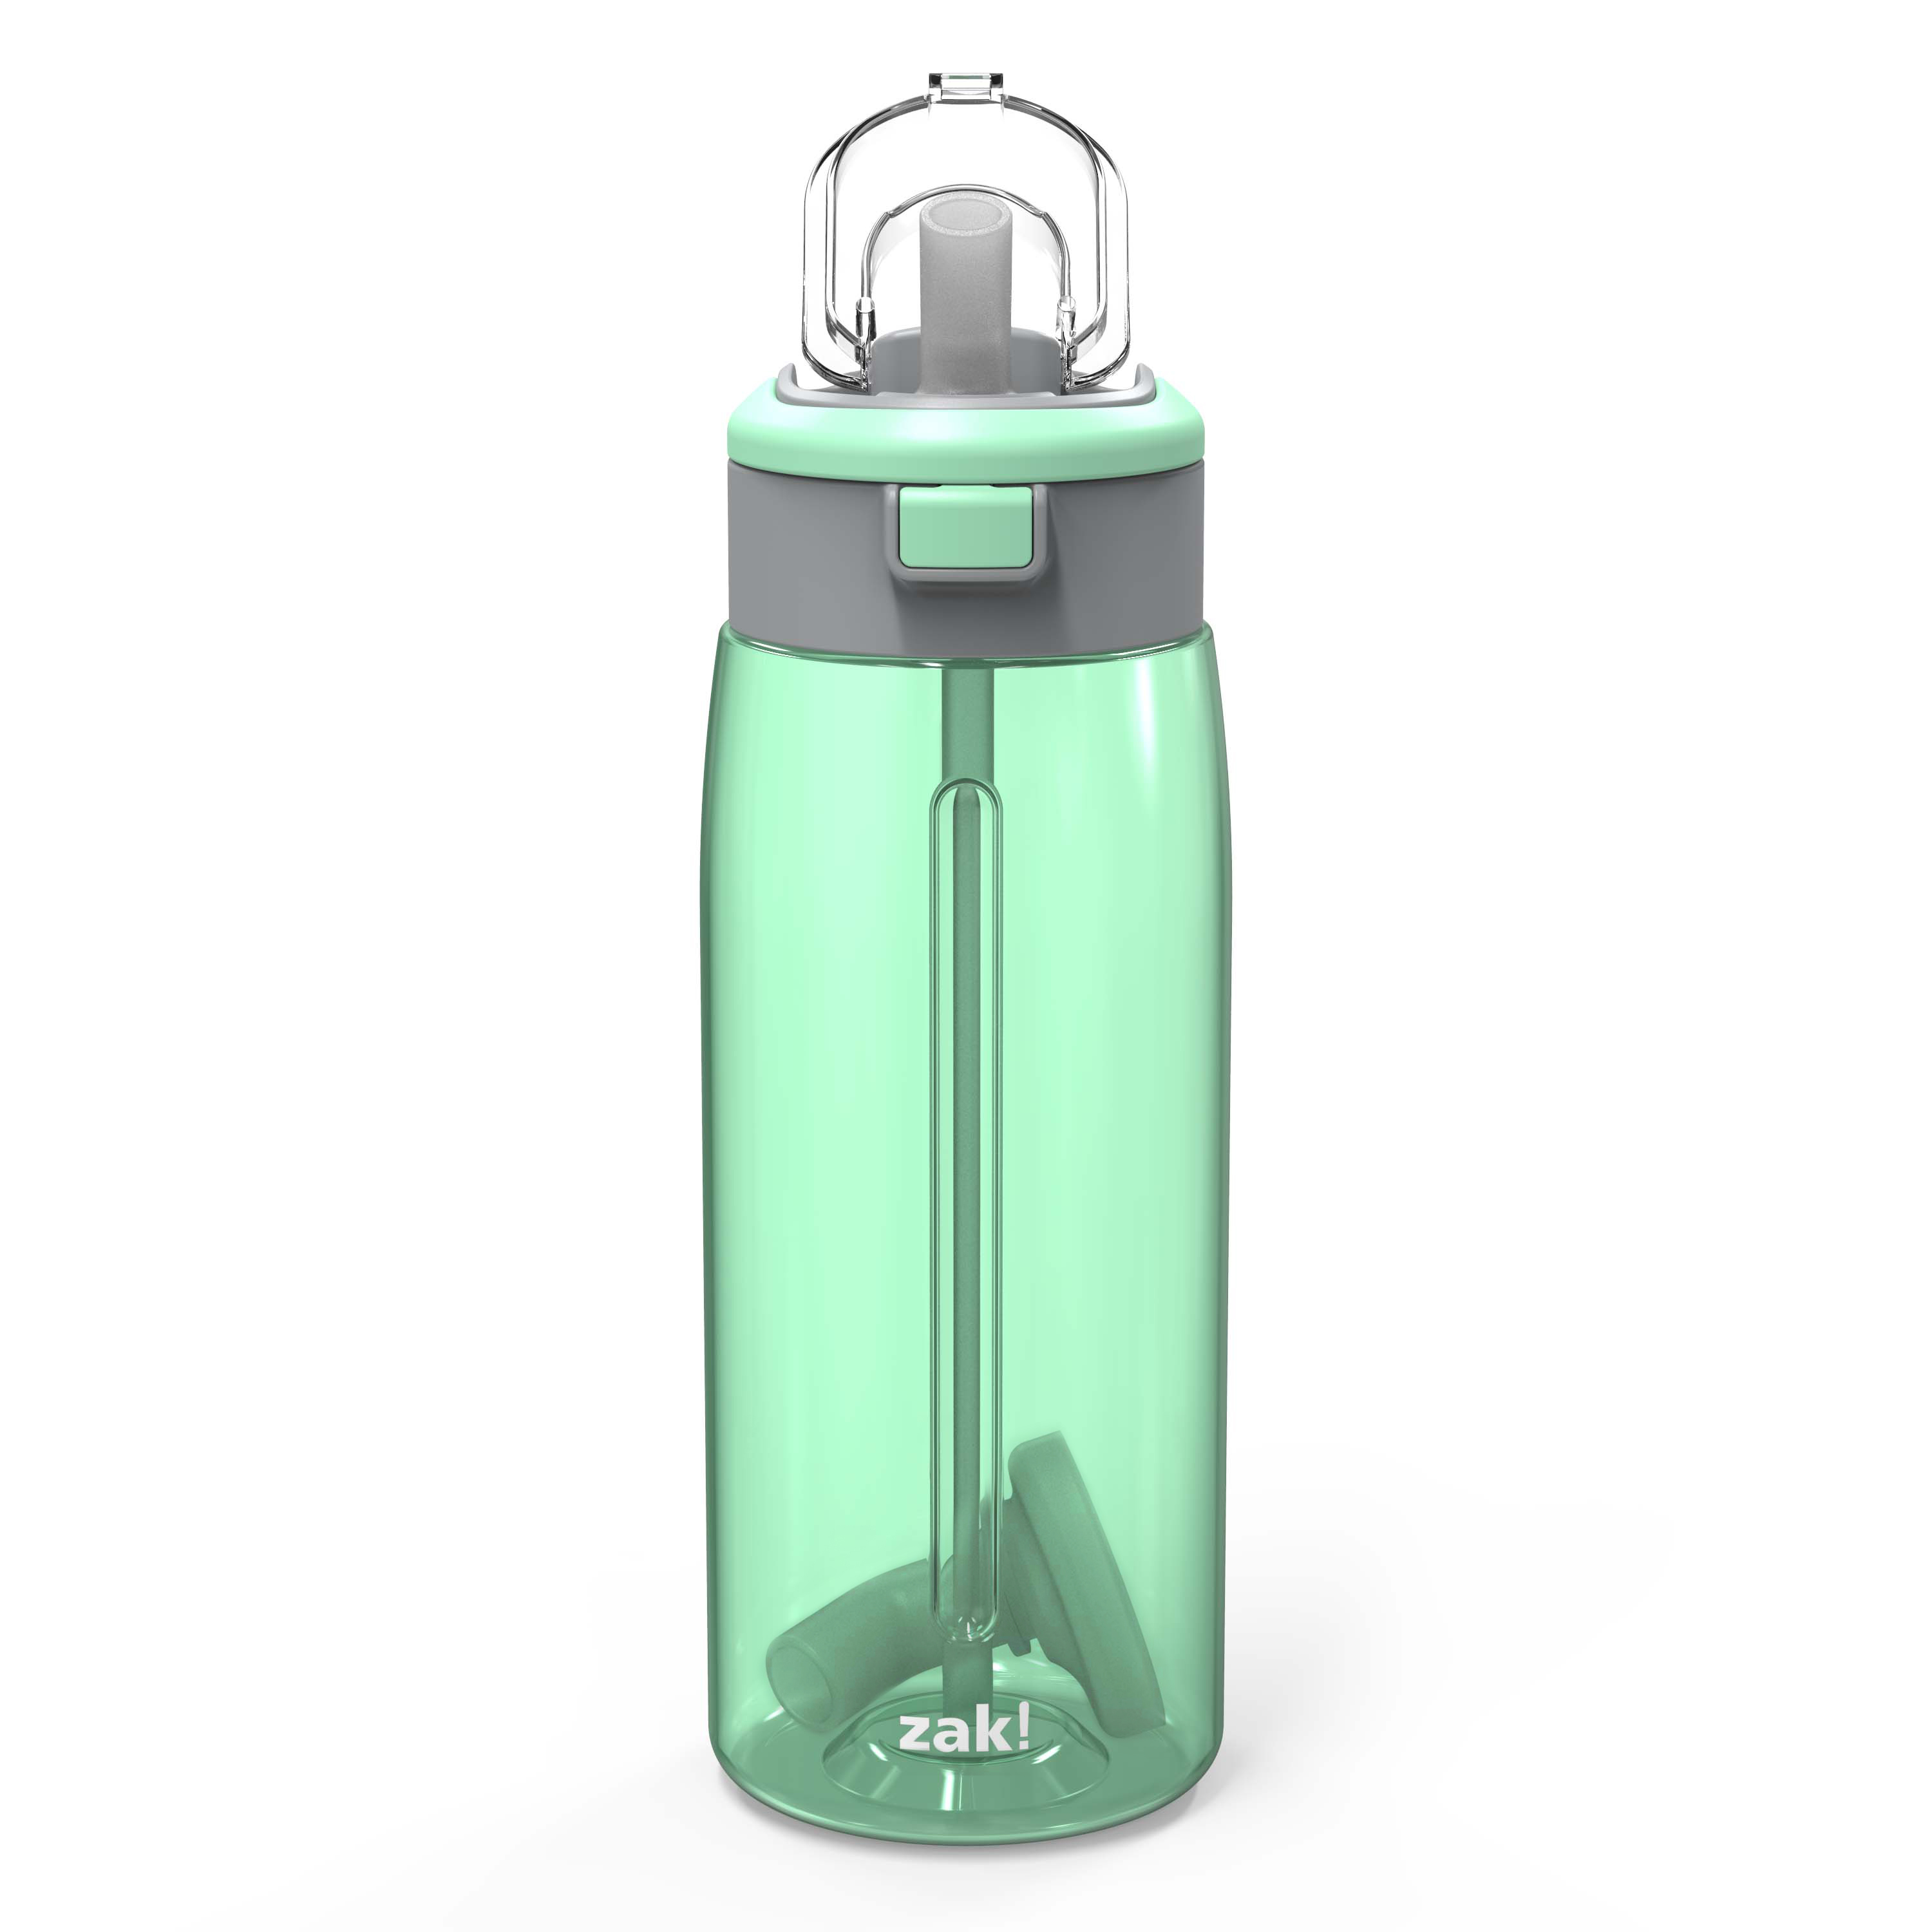 Genesis 32 ounce Reusable Plastic Water Bottle with Interchangeable Spouts, Neo Mint slideshow image 8